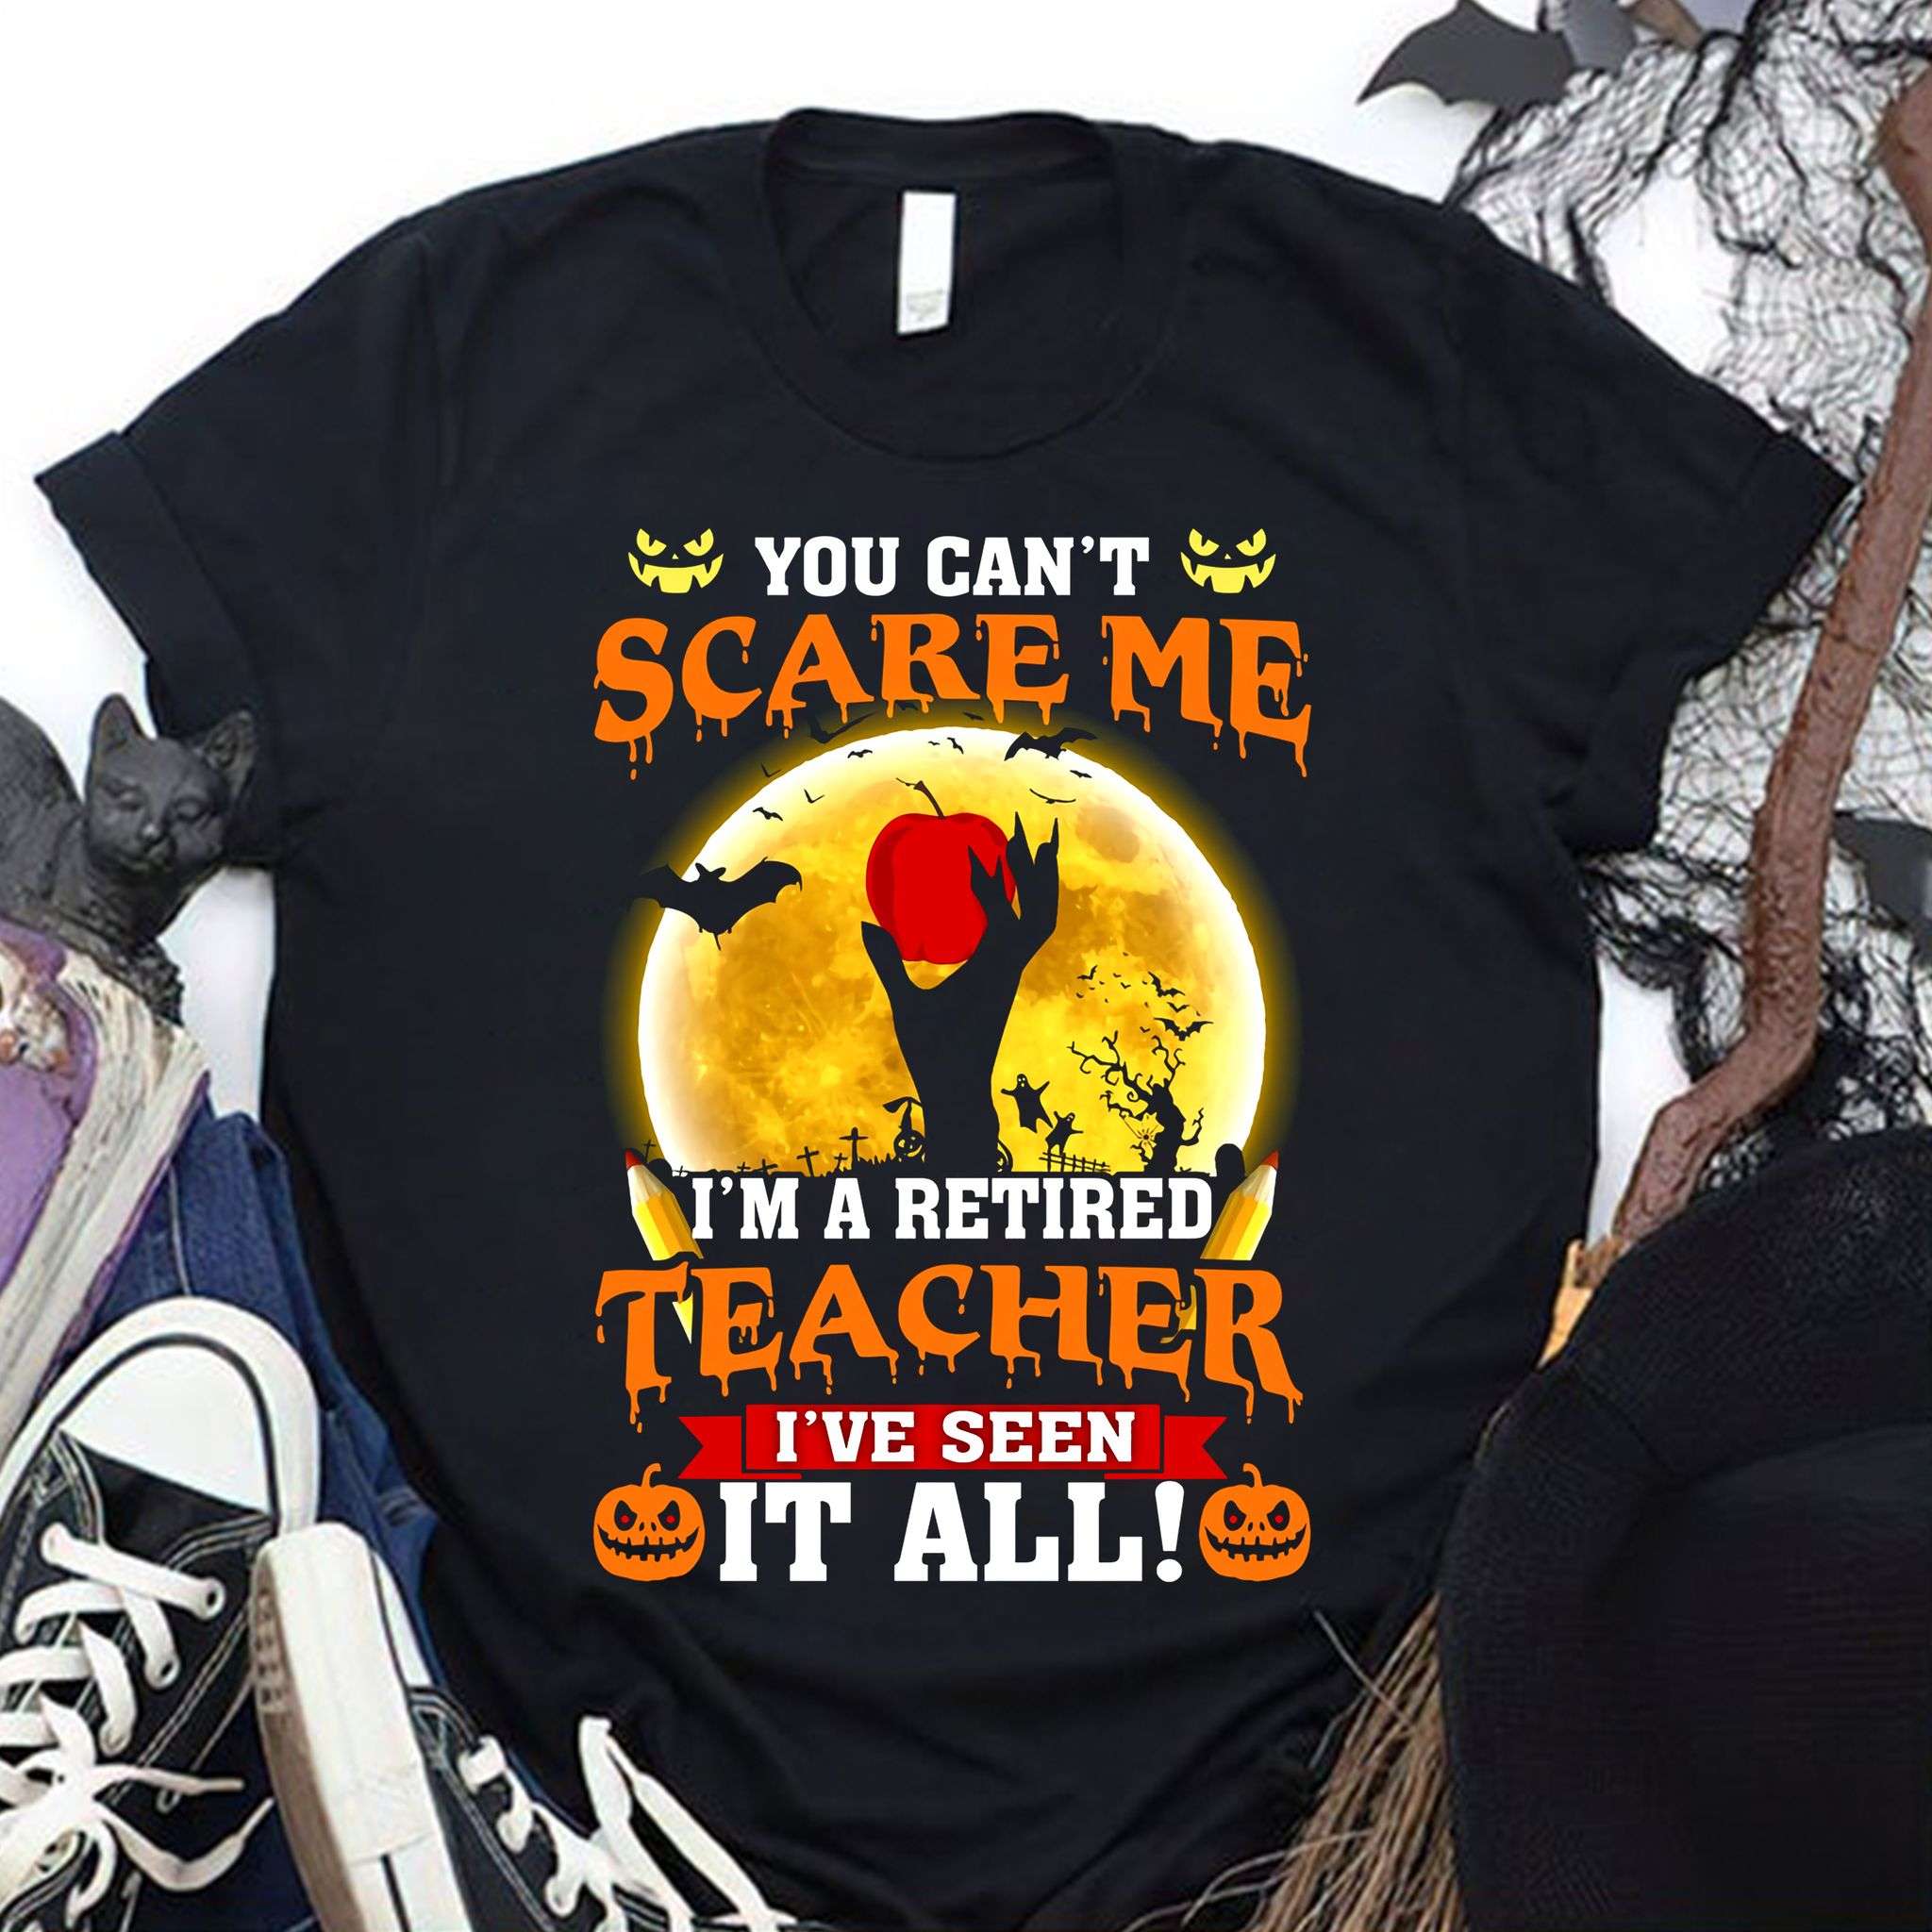 You can't scare me I'm a retired teacher I've seen it all - Halloween teacher costume, teacher the job